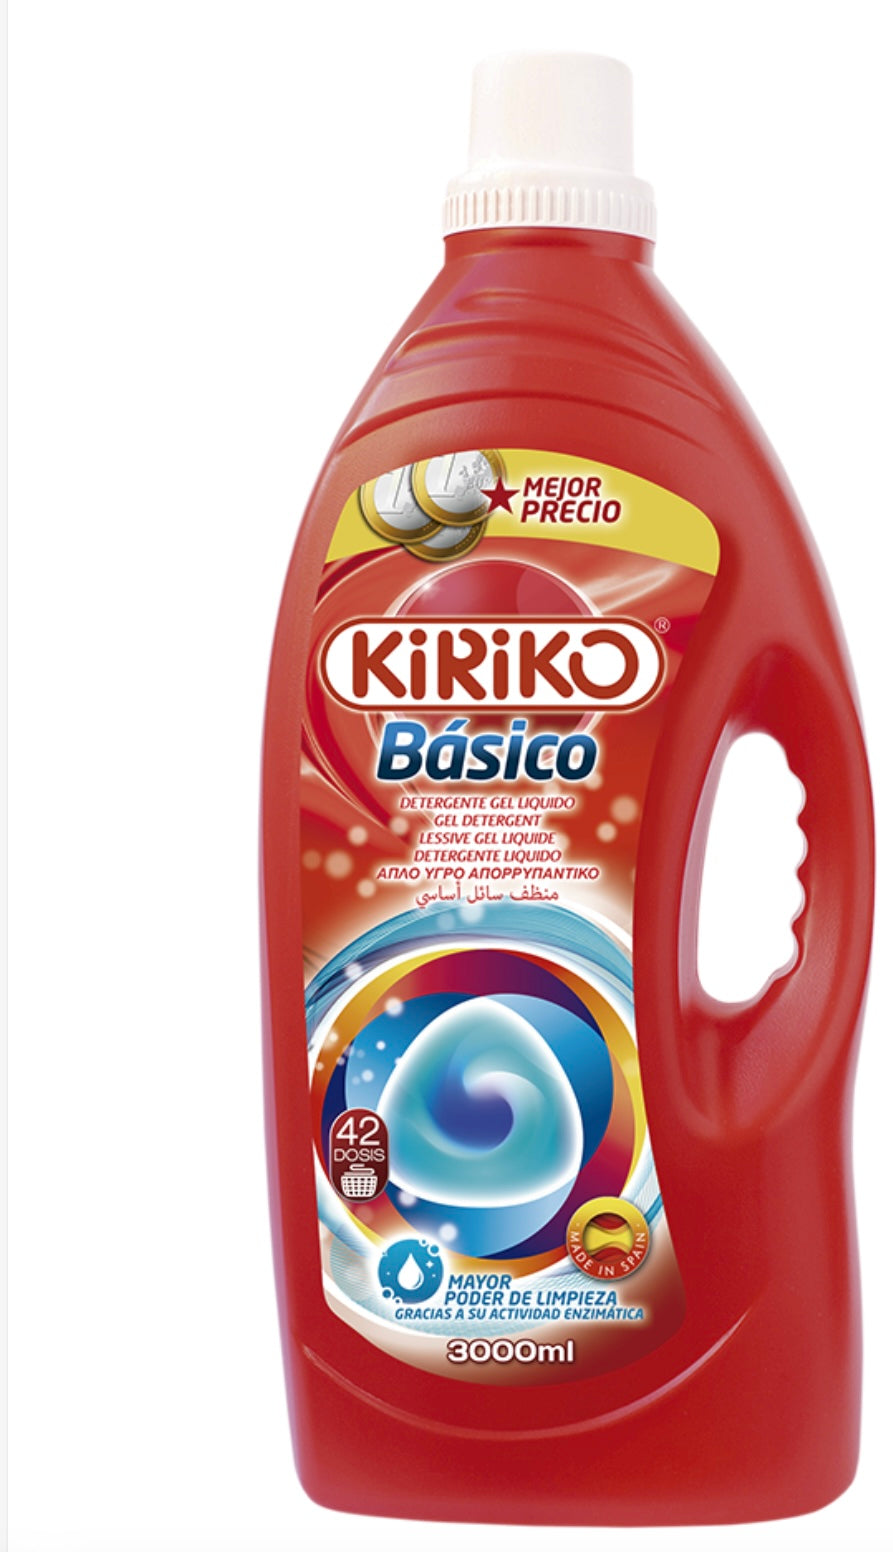 Kiriko Basic Liquid Detergent